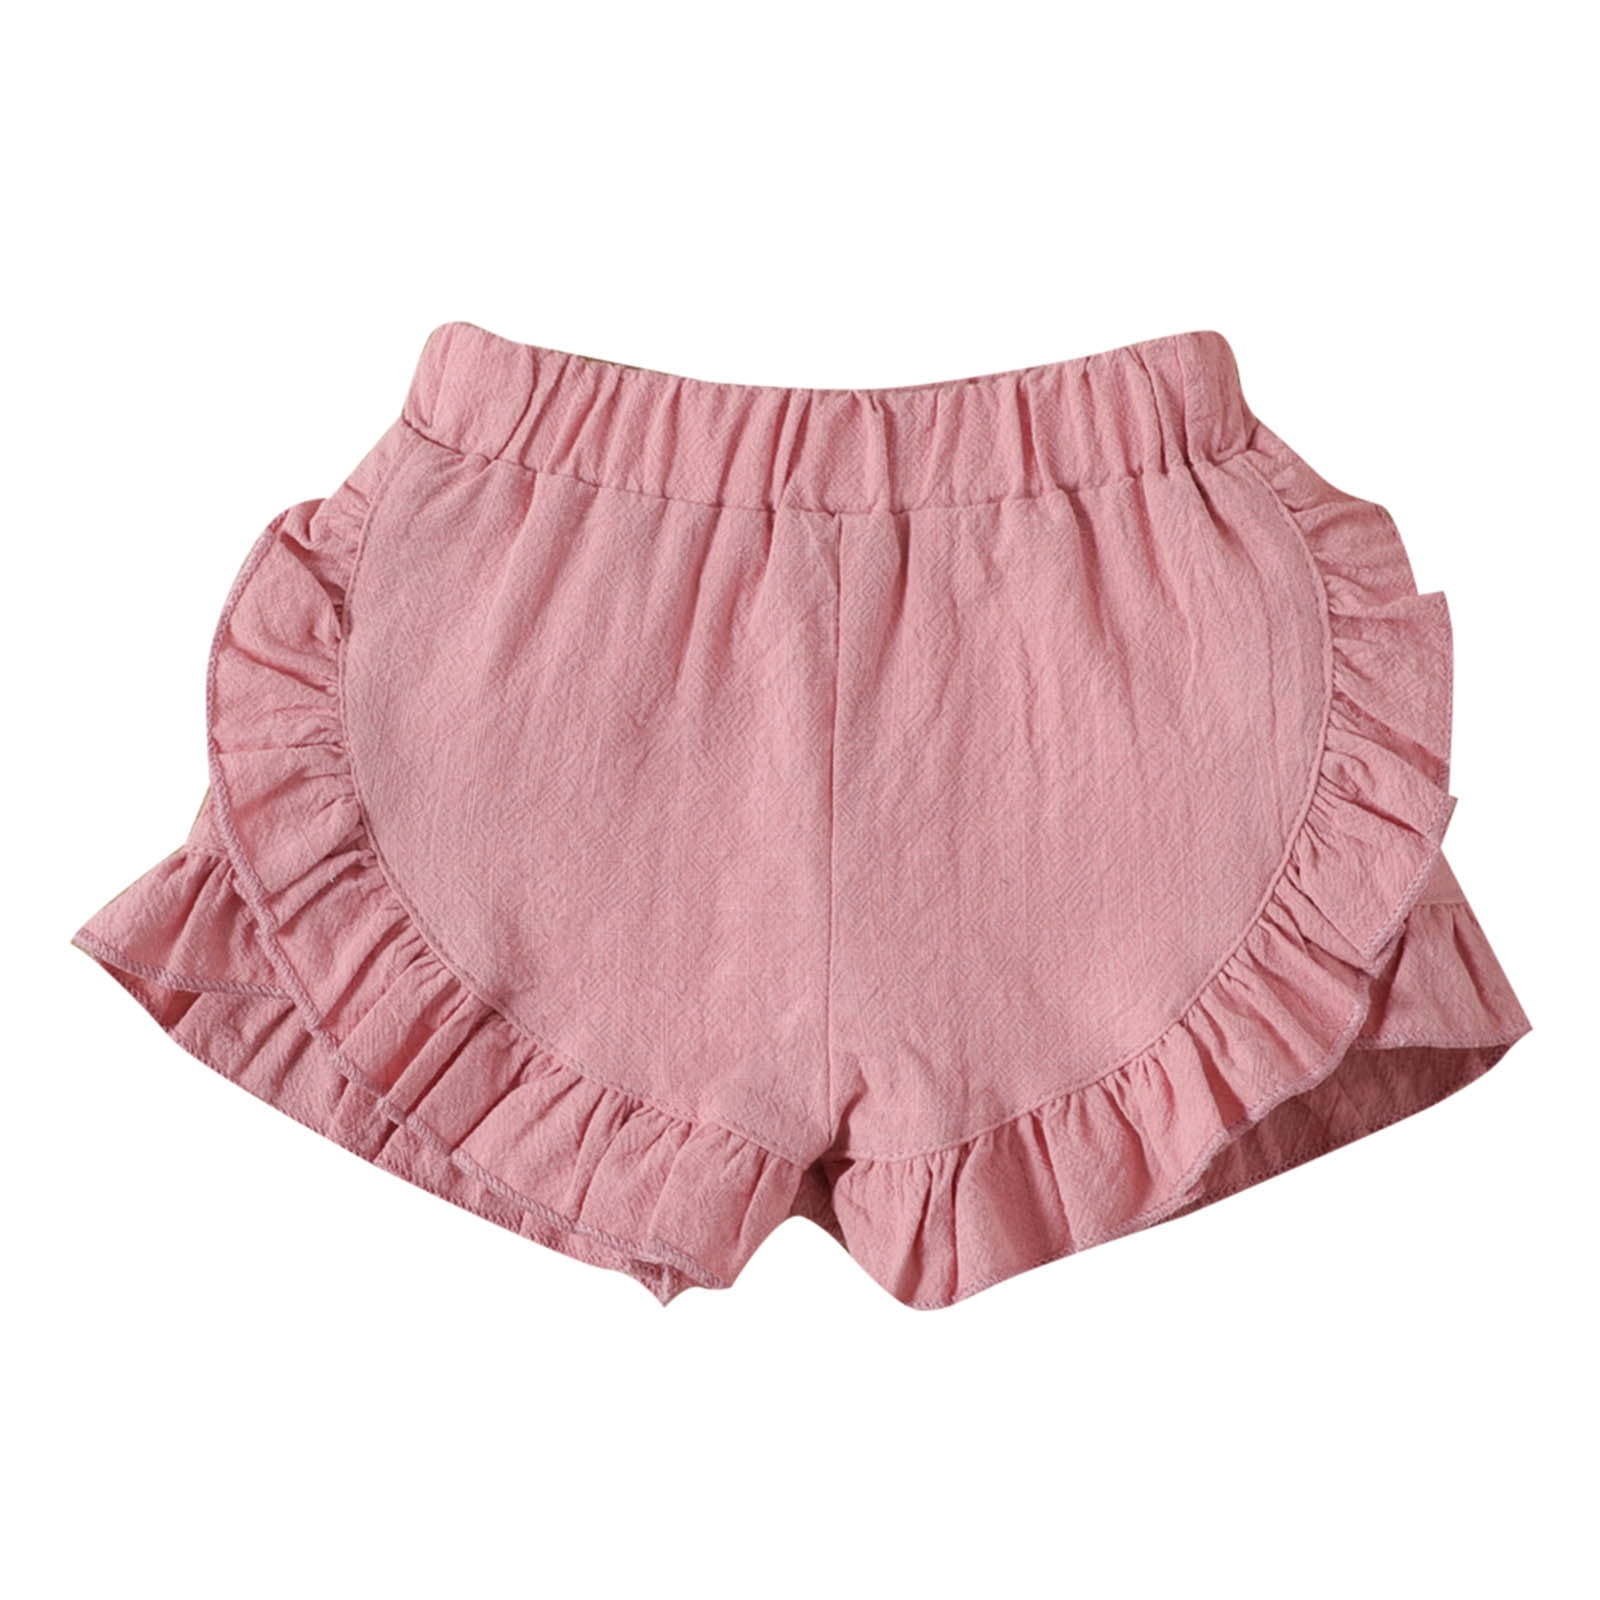 piuwrlz Pants for Kid/Toddler Boy Girls Solid Color Single Piece